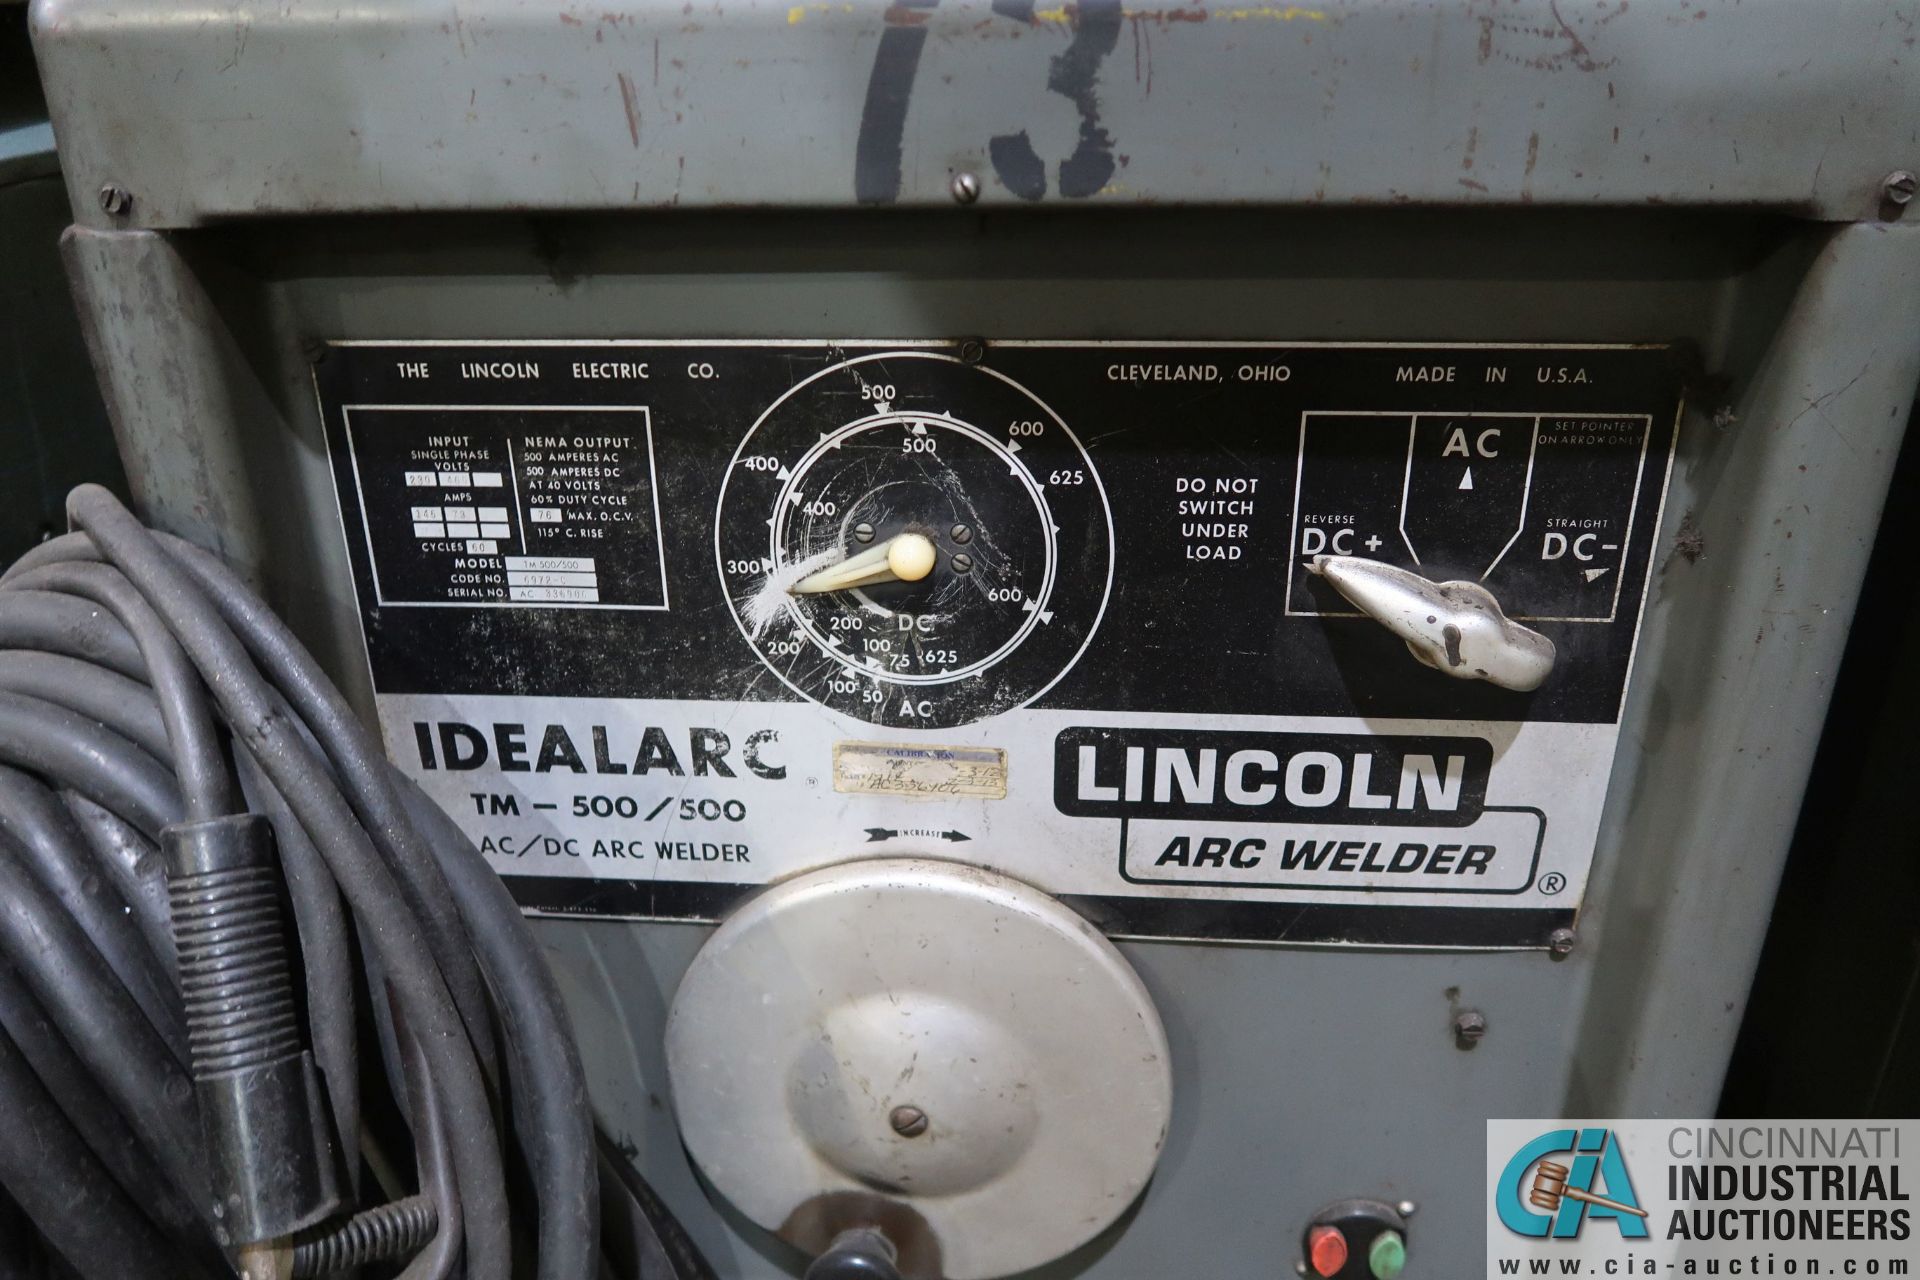 500 AMP LINCOLN IDEALARC TM500/500 AC/DC ARC WELDER; S/N AC-336906 - Image 2 of 3